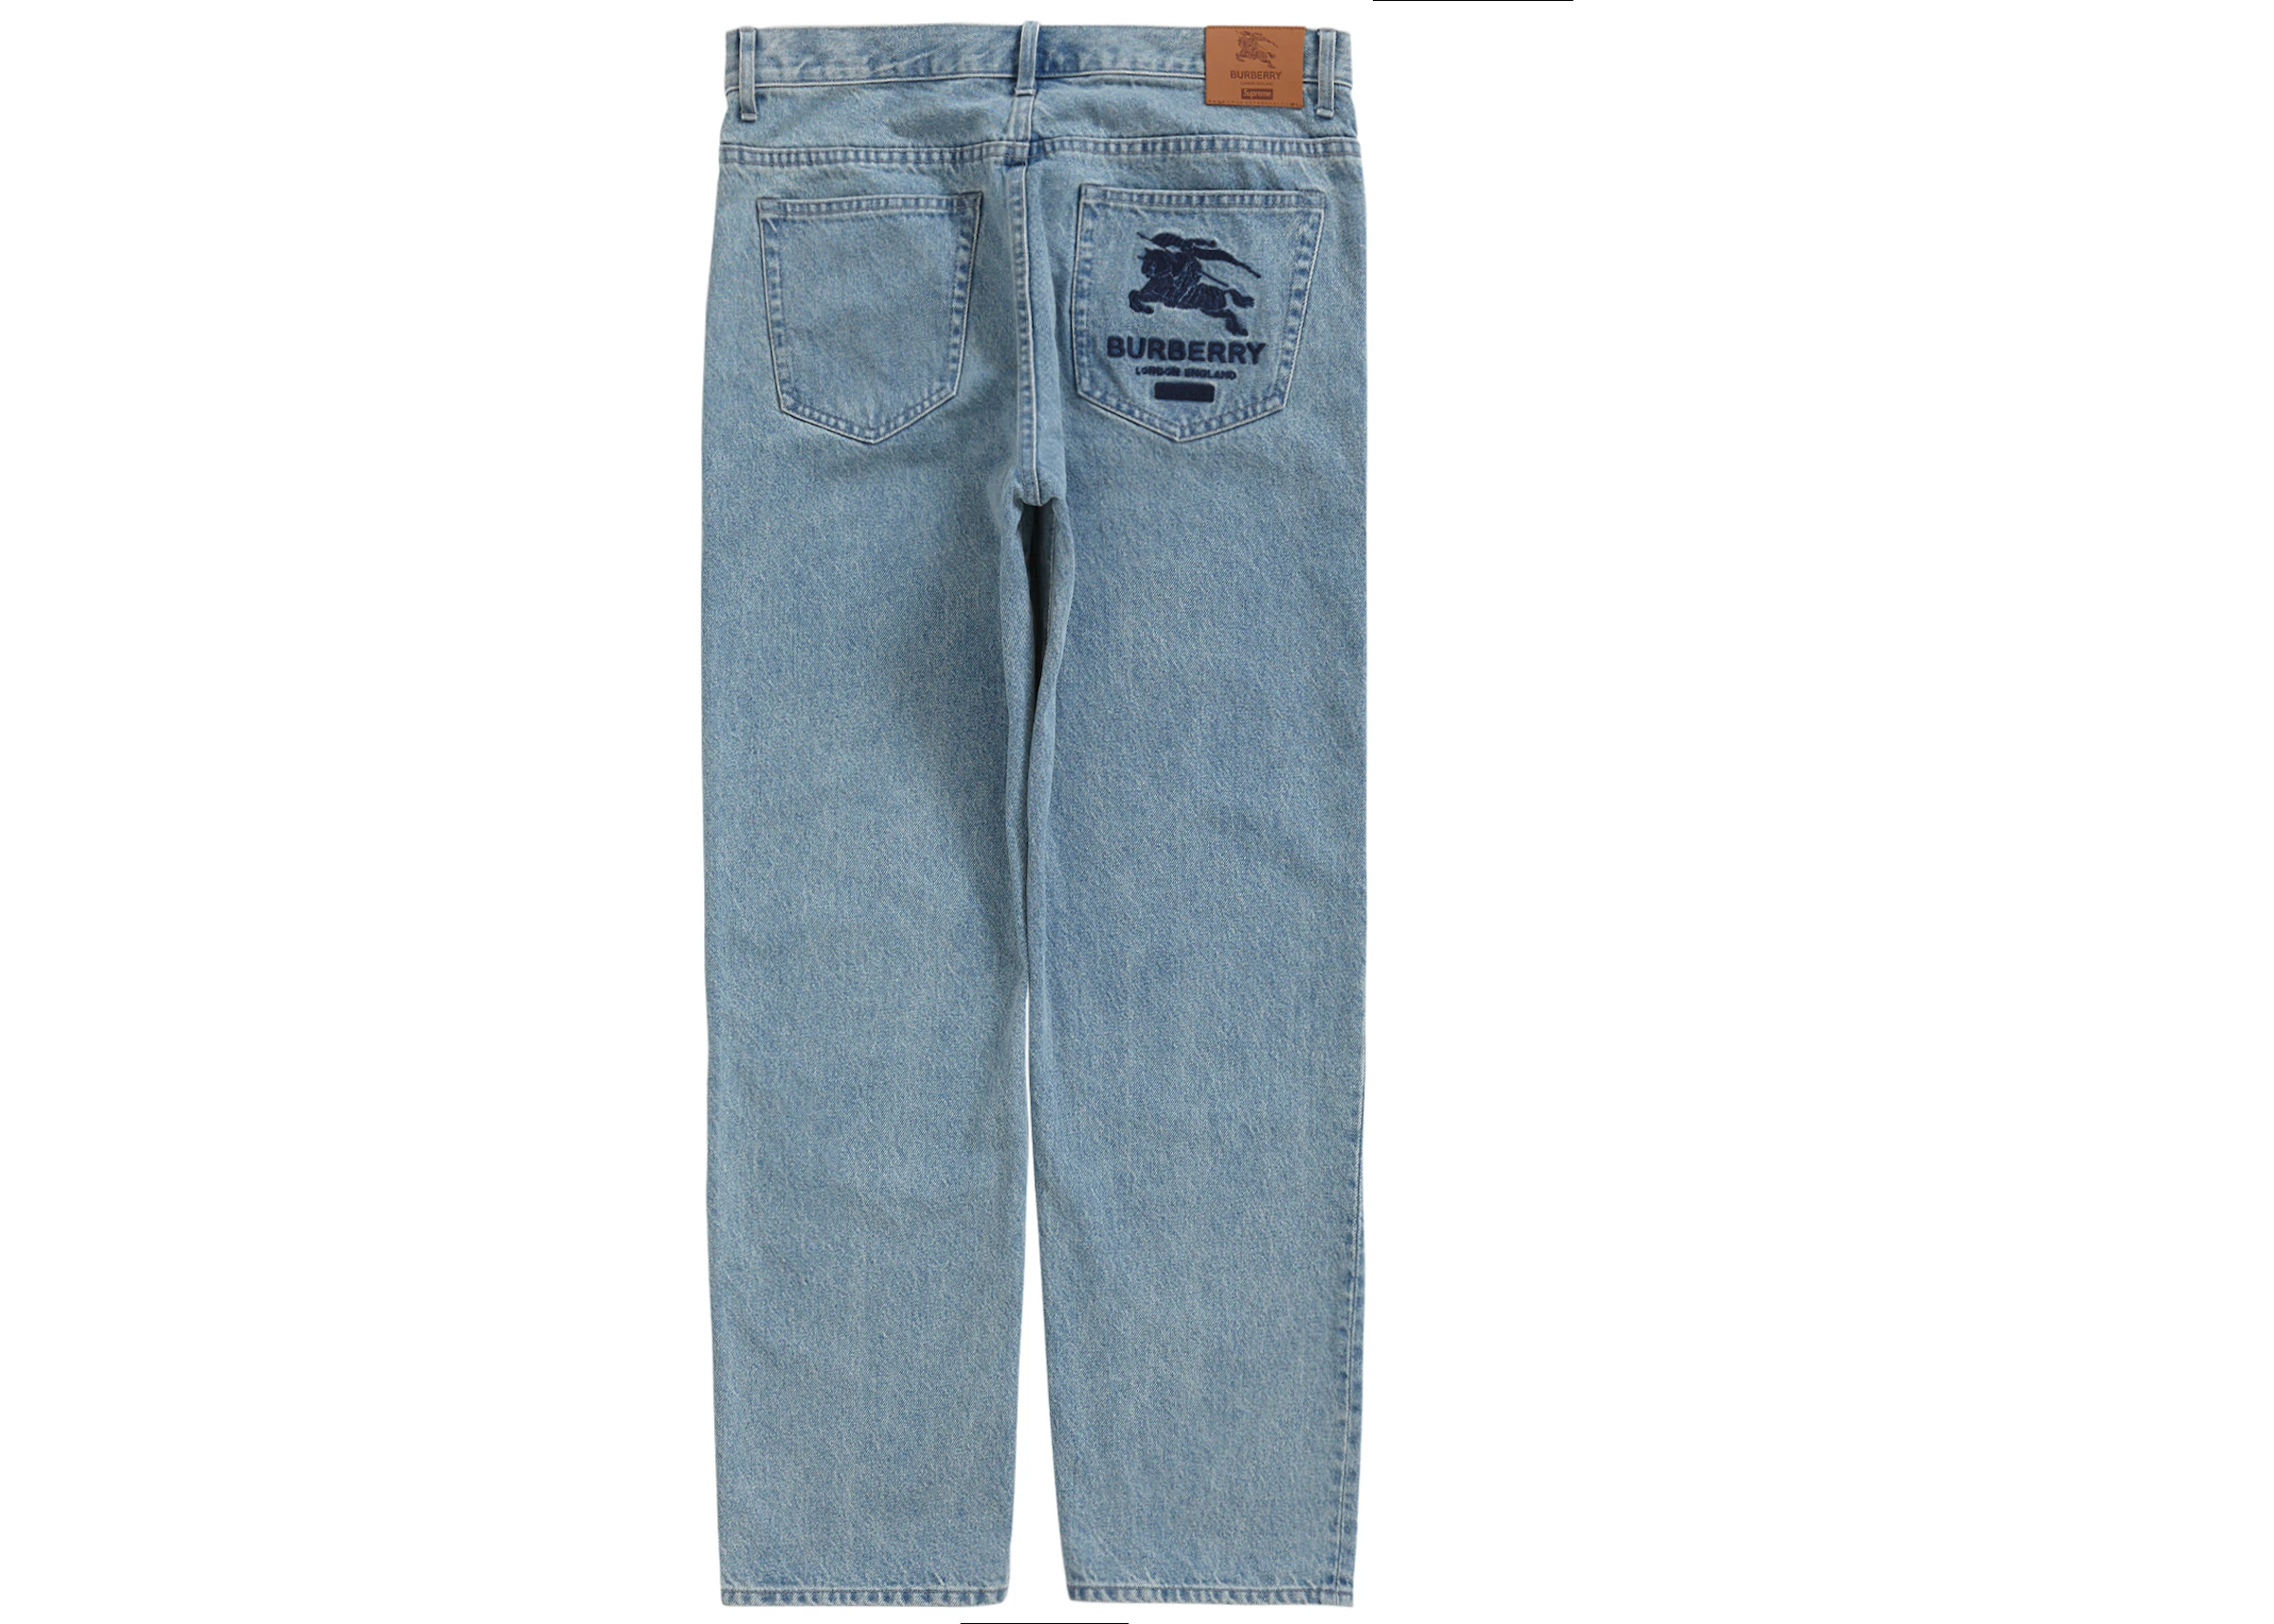 Actualizar 62+ imagen burberry jeans pants - Abzlocal.mx